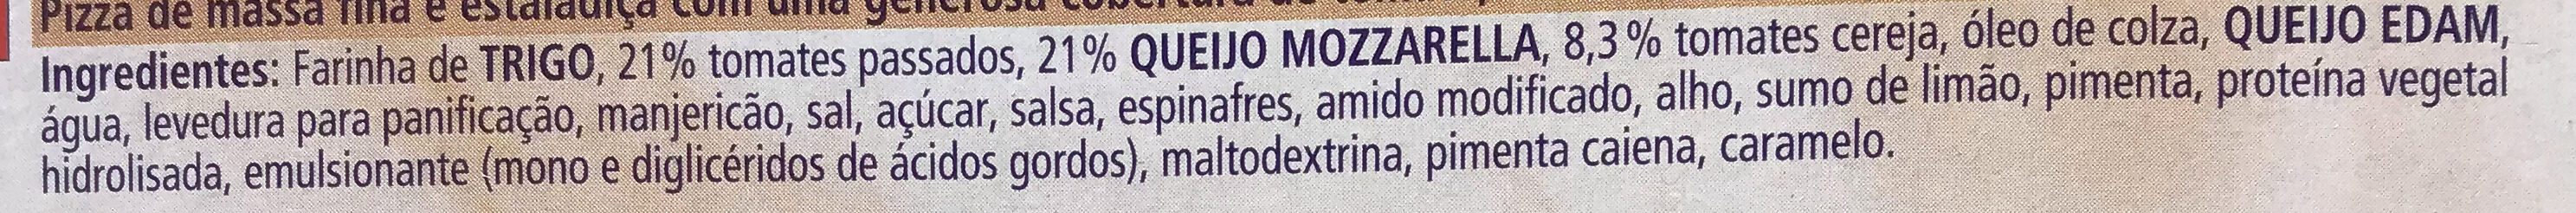 Ristorante Pizza Mozzarella - Ingredientes